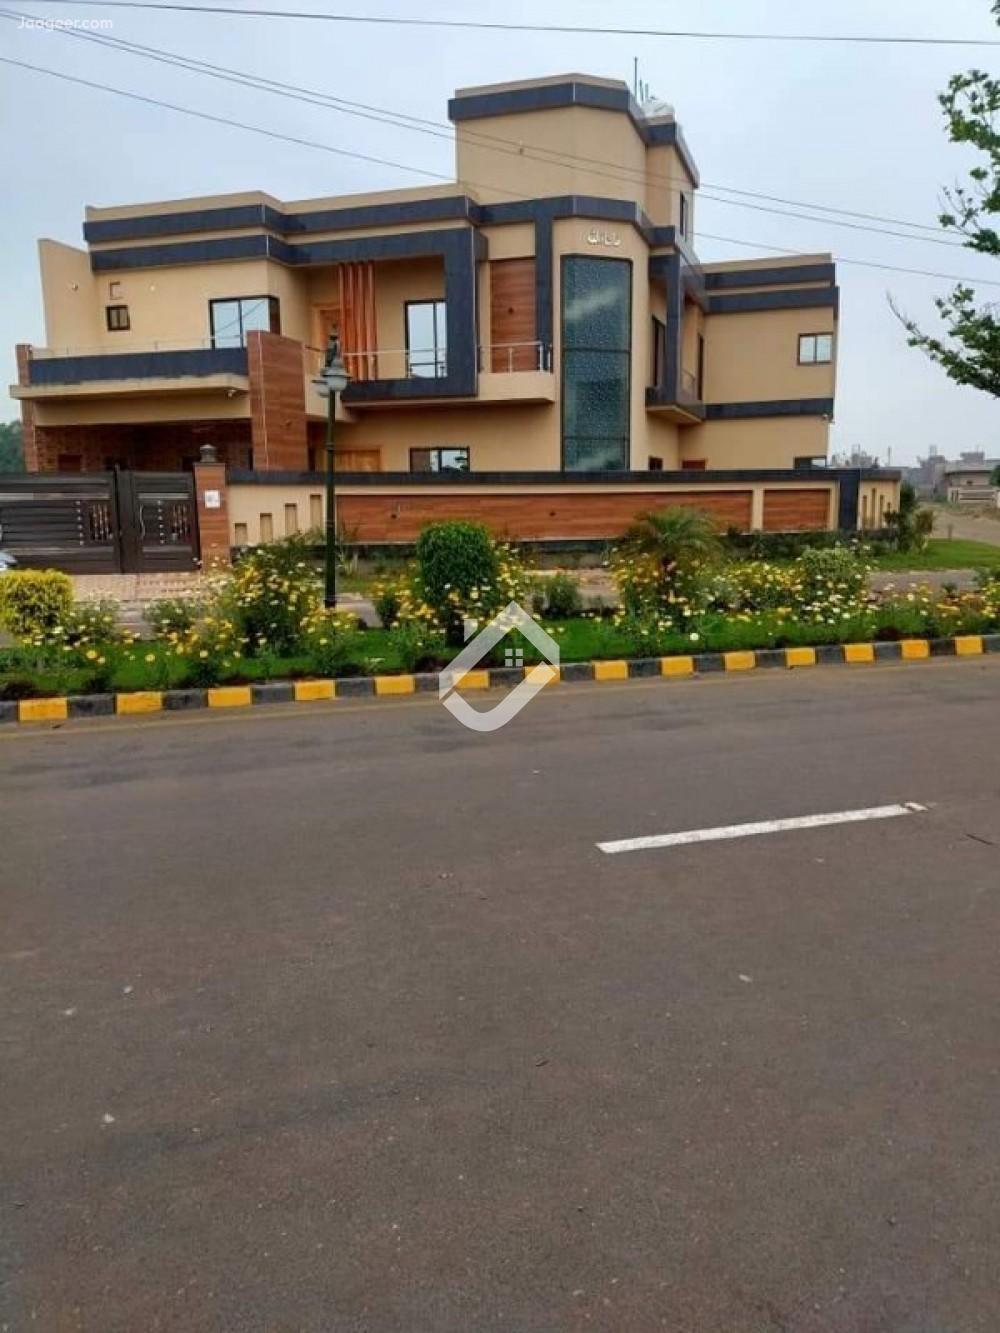 Main image 5 Marla Residential Plot For Sale In Shadman Enclave Near Faizpur Interchange Block_F Shadman Enclave Housing Scheme, Lahore